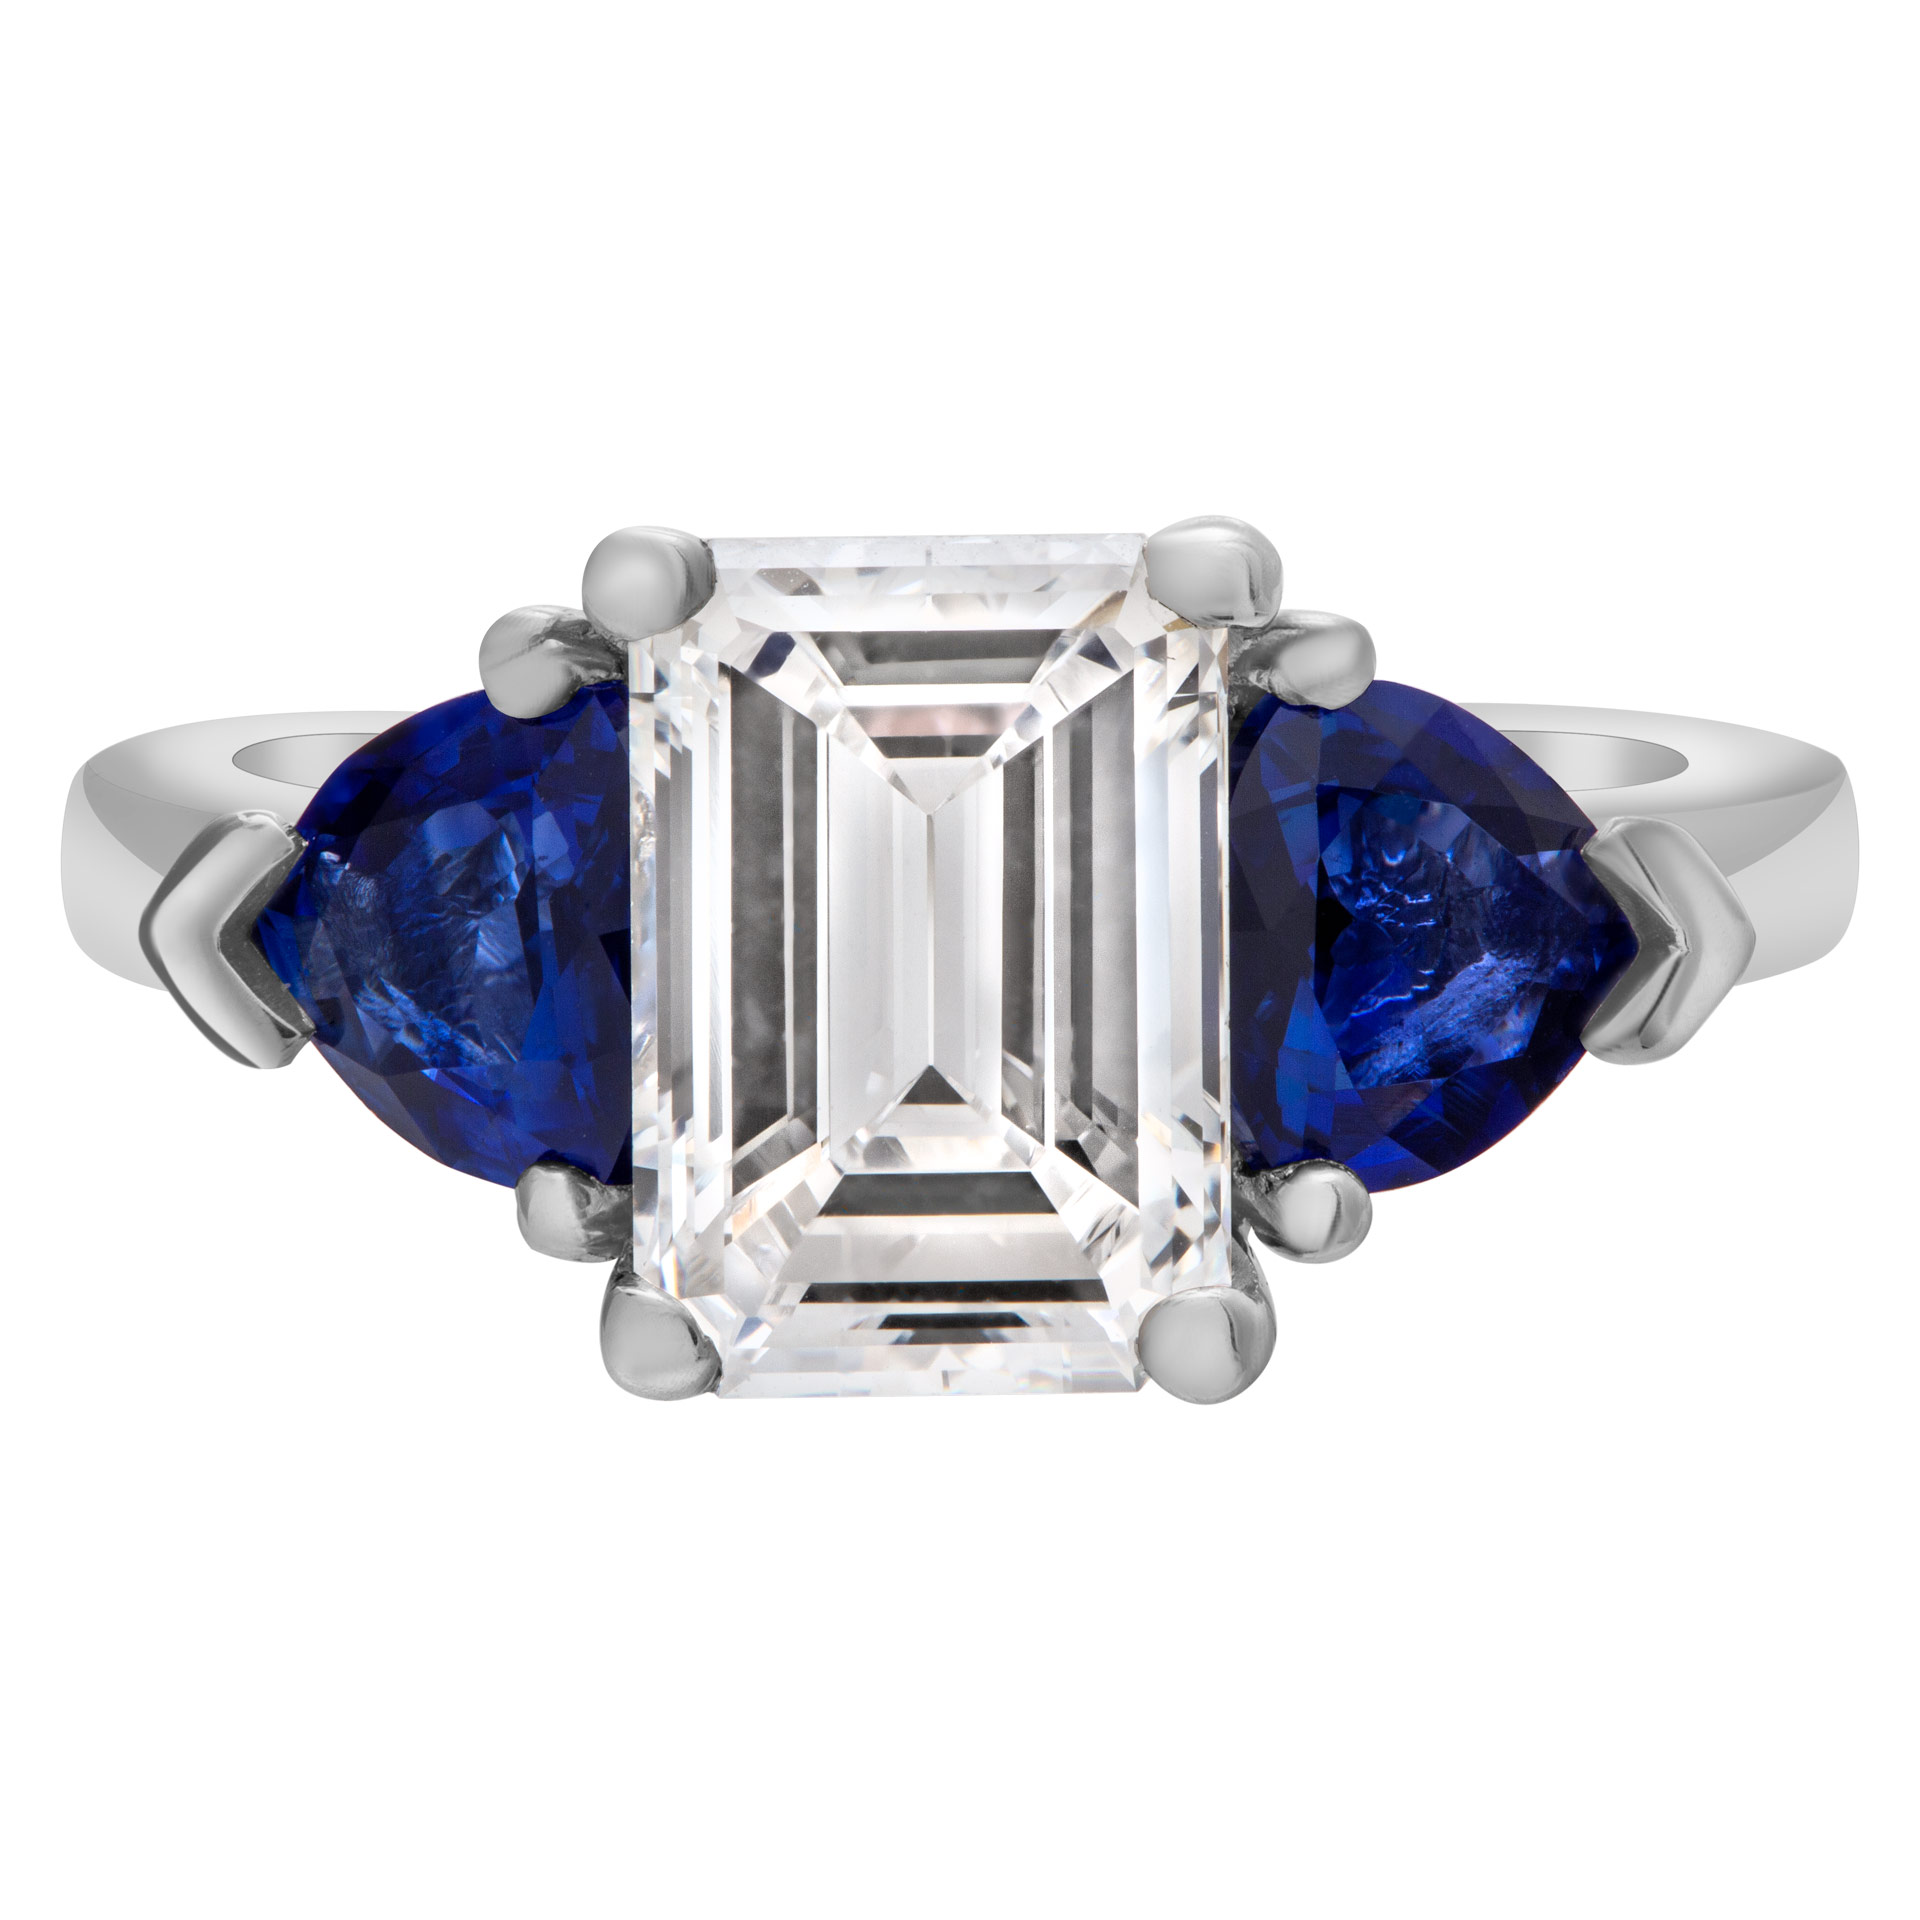 GIA certified emerald cut diamond 2.32 carat (D color, VS1 clarity) ring in platinum setting image 1